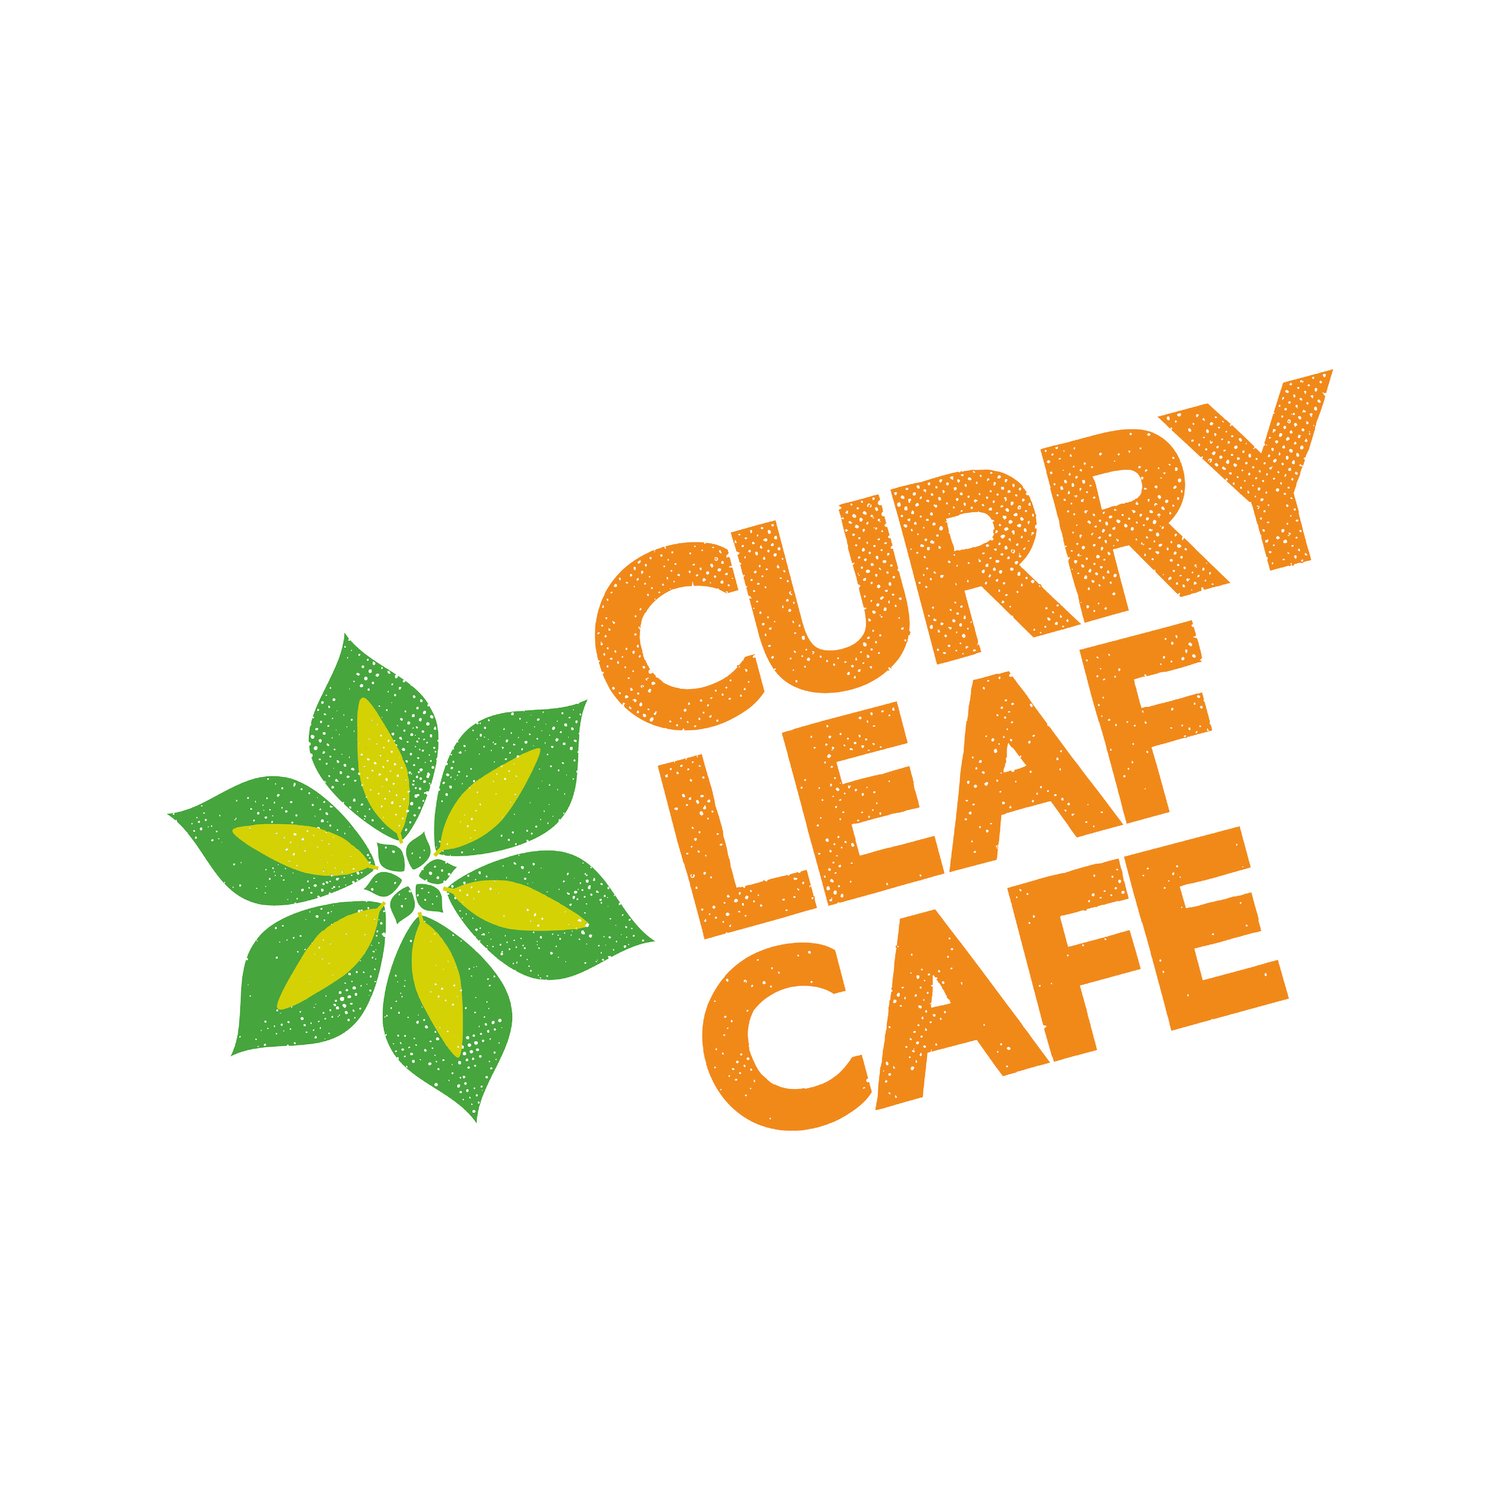 CURRY LEAF CAFE